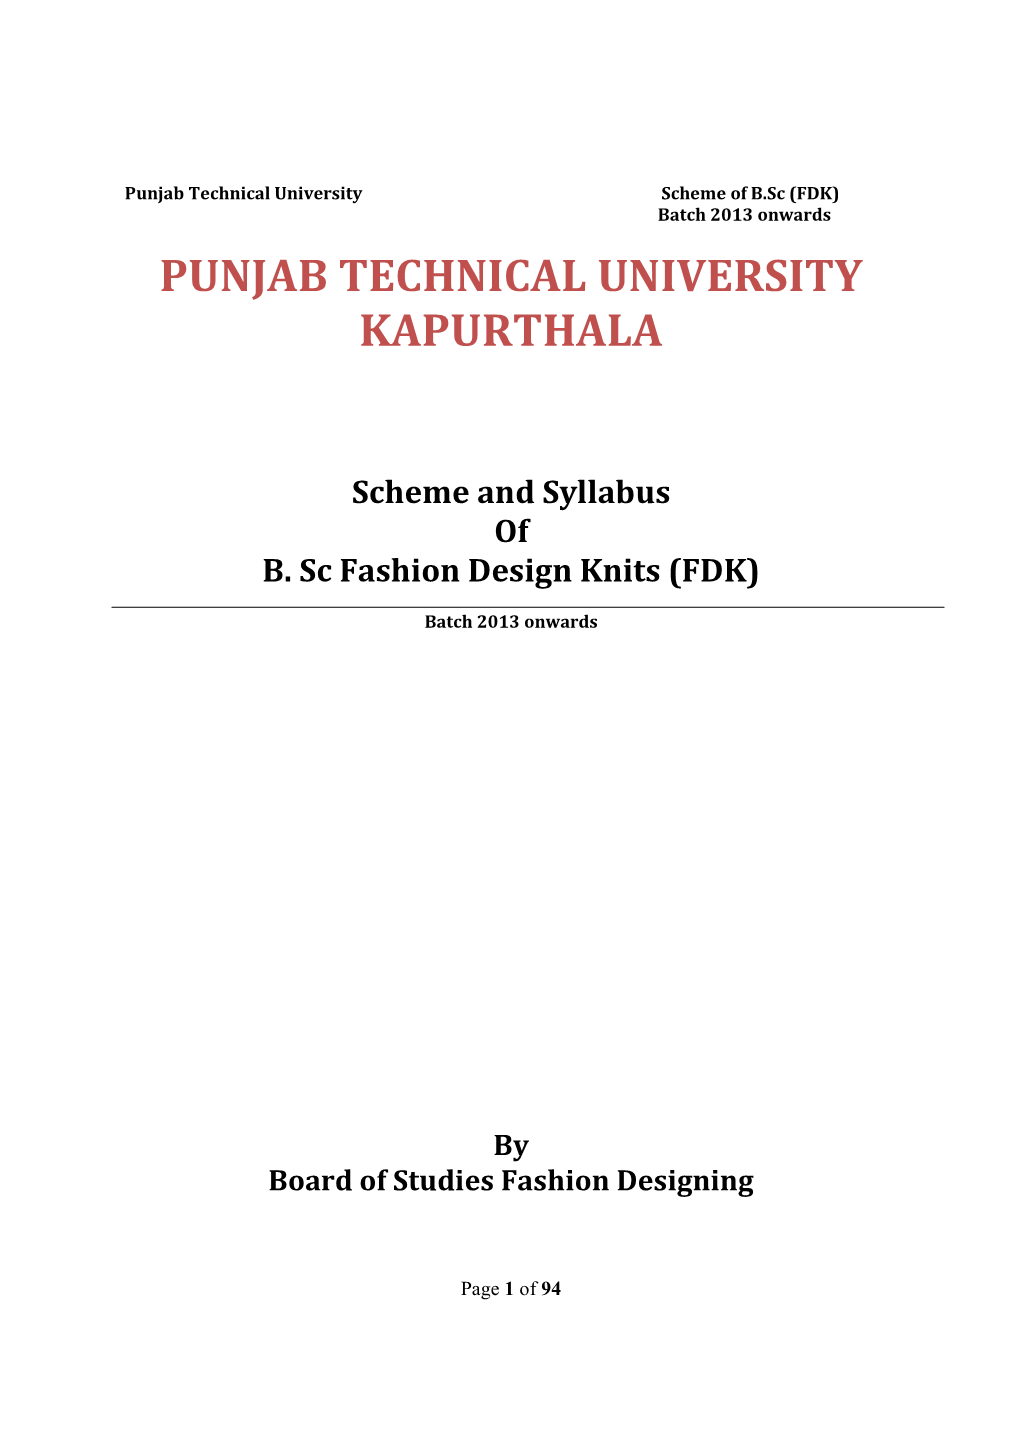 Scheme and Syllabus of B. Sc Fashion Design Knits (FDK)